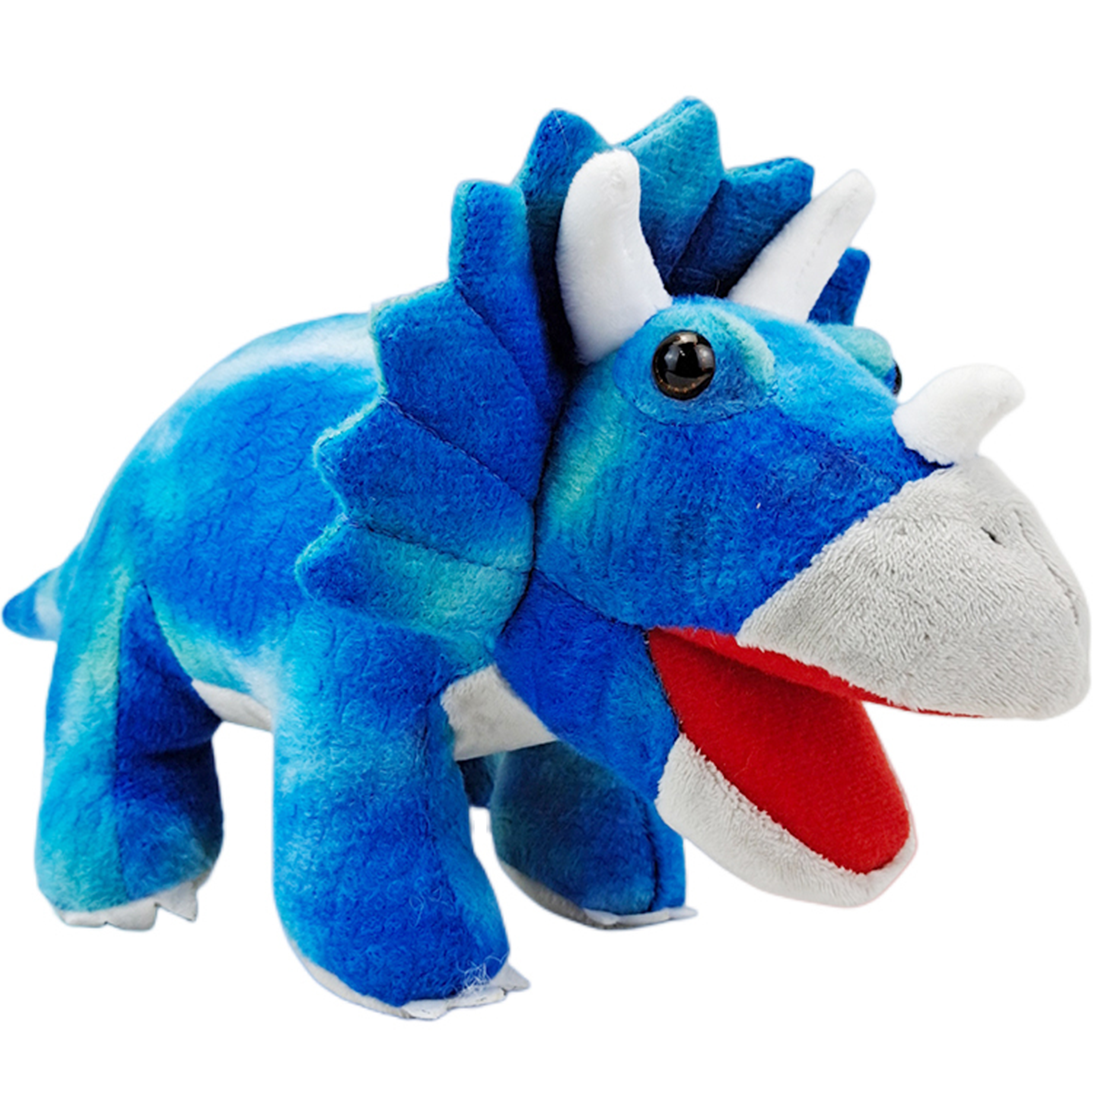 Taj the Triceratops Dinosaur Plush Toy